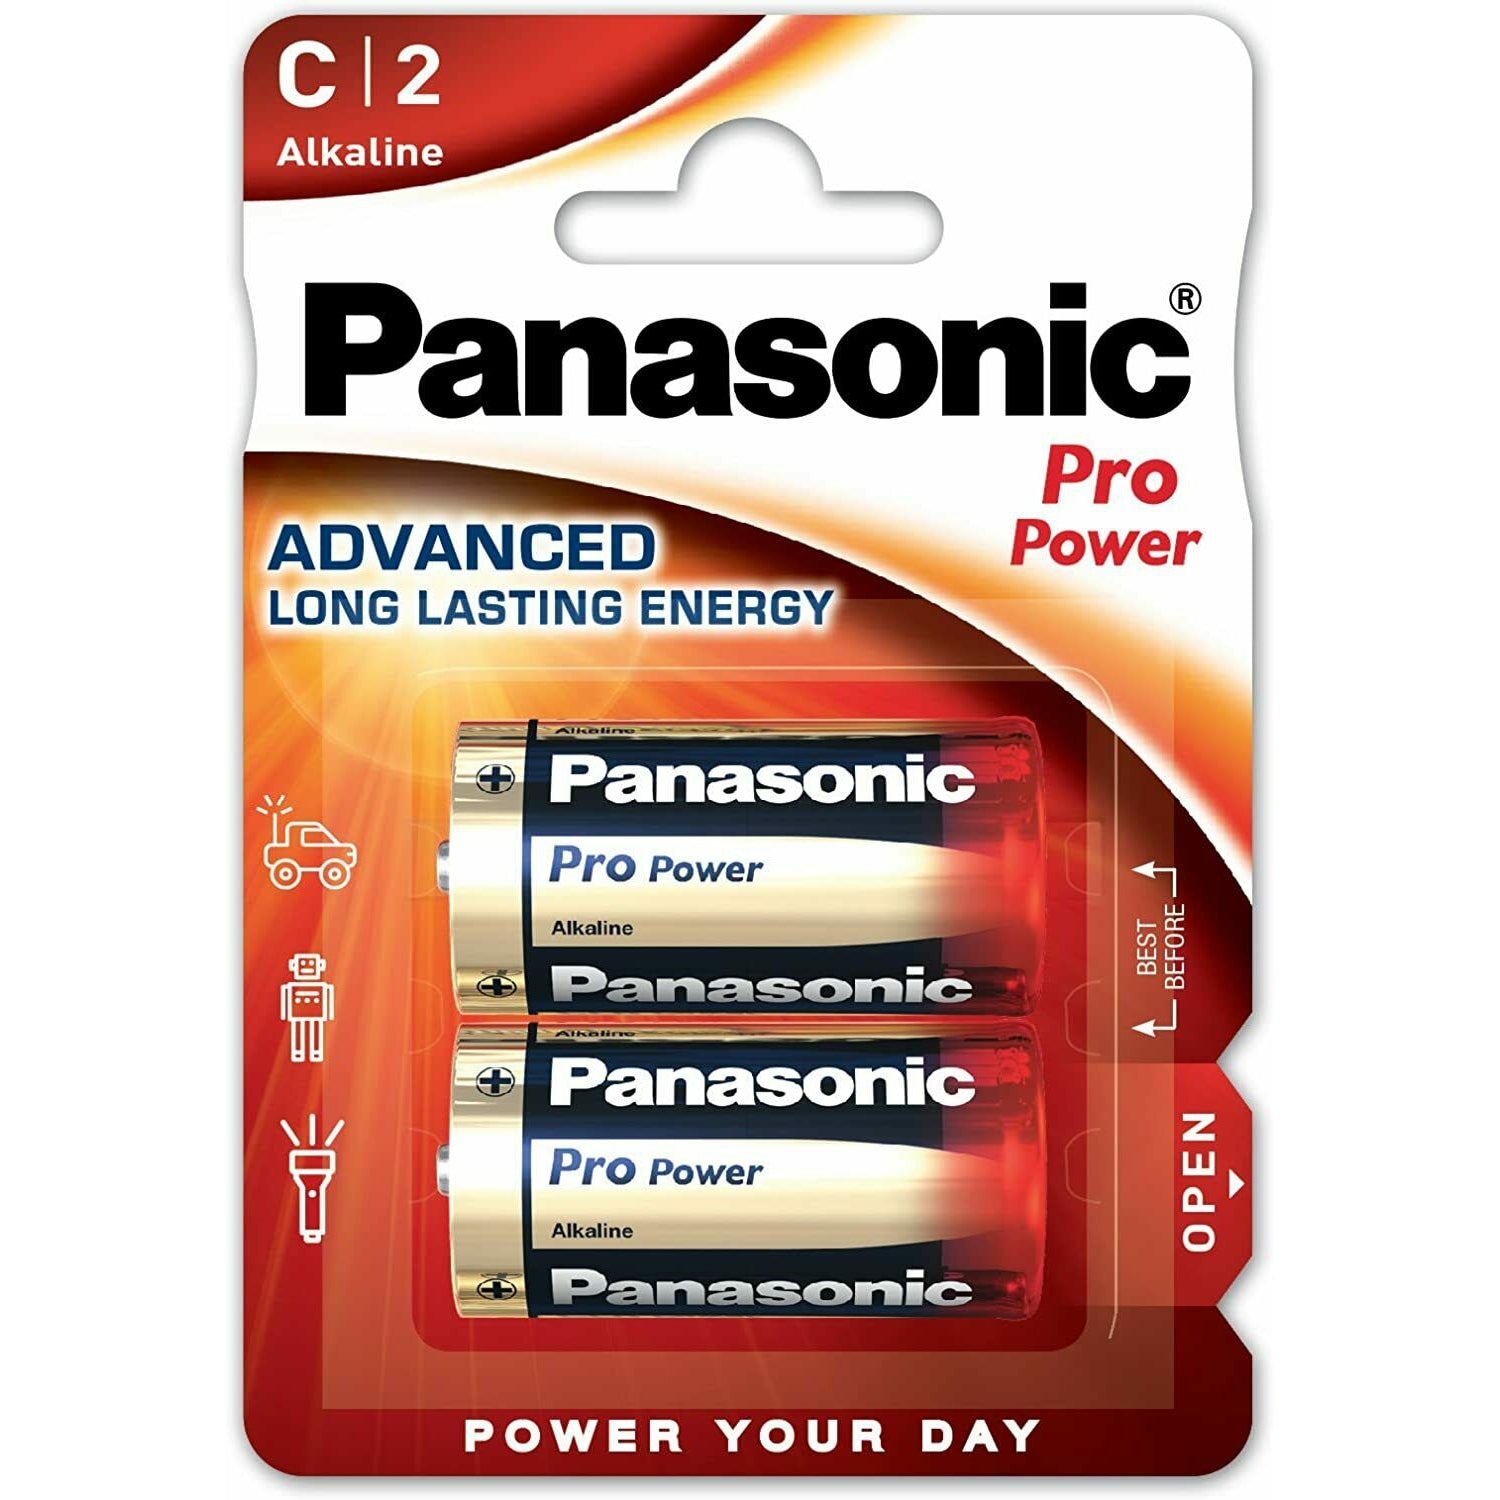 Panasonic C Pro Power Alkaline Batteries LR14 2 Pack / 8 Pack